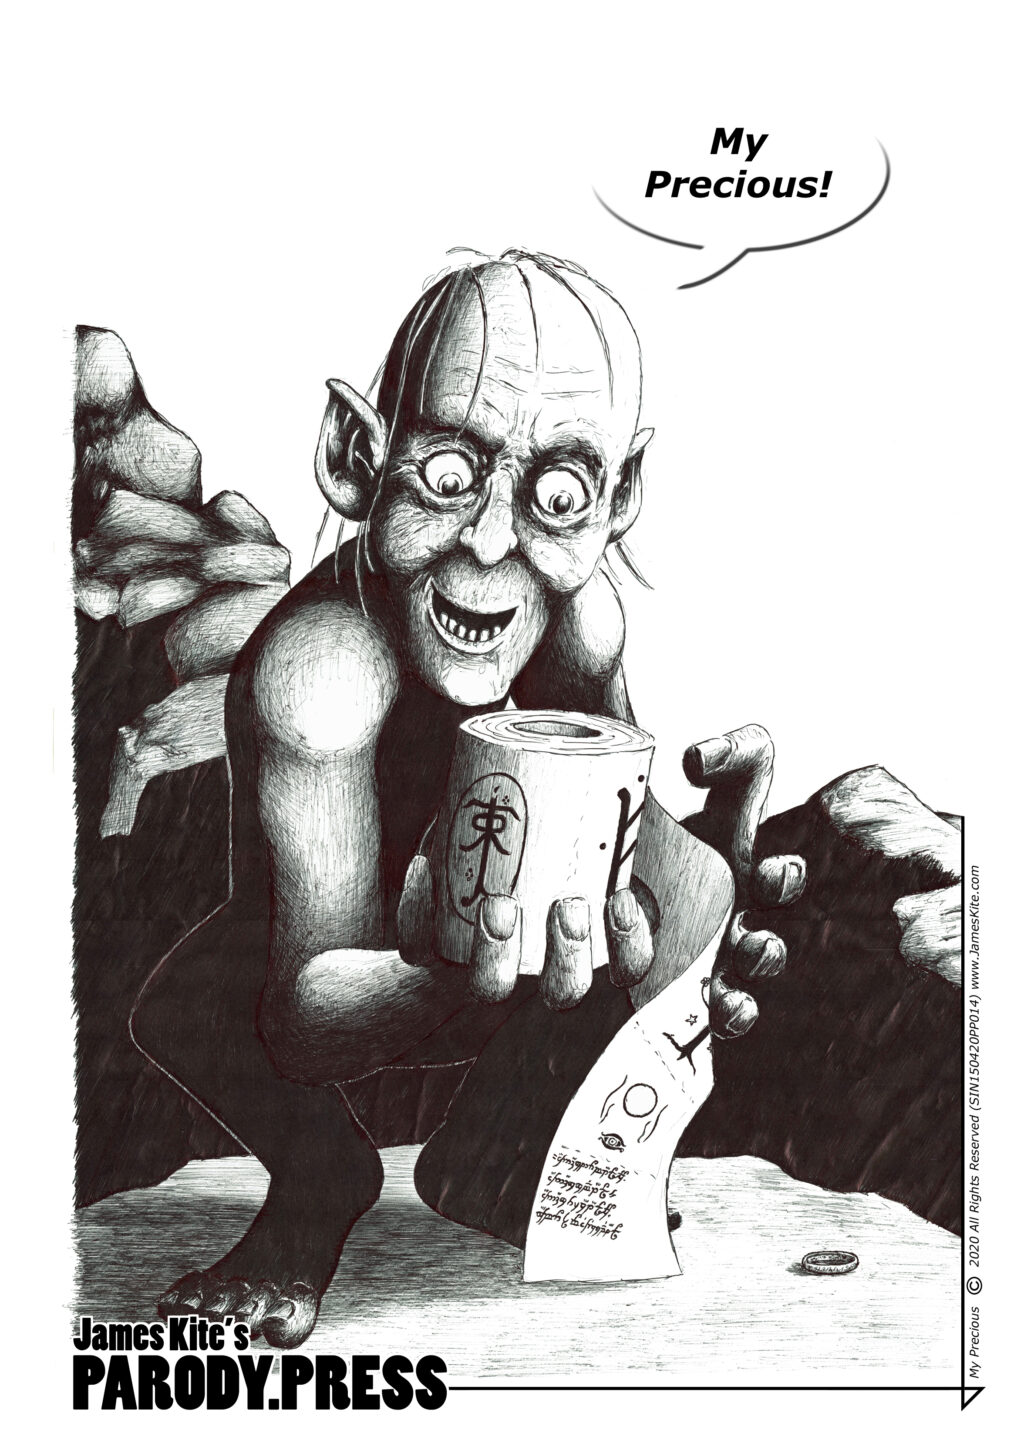 Illustration of Gollum holding toilet paper saying 'My precious'.